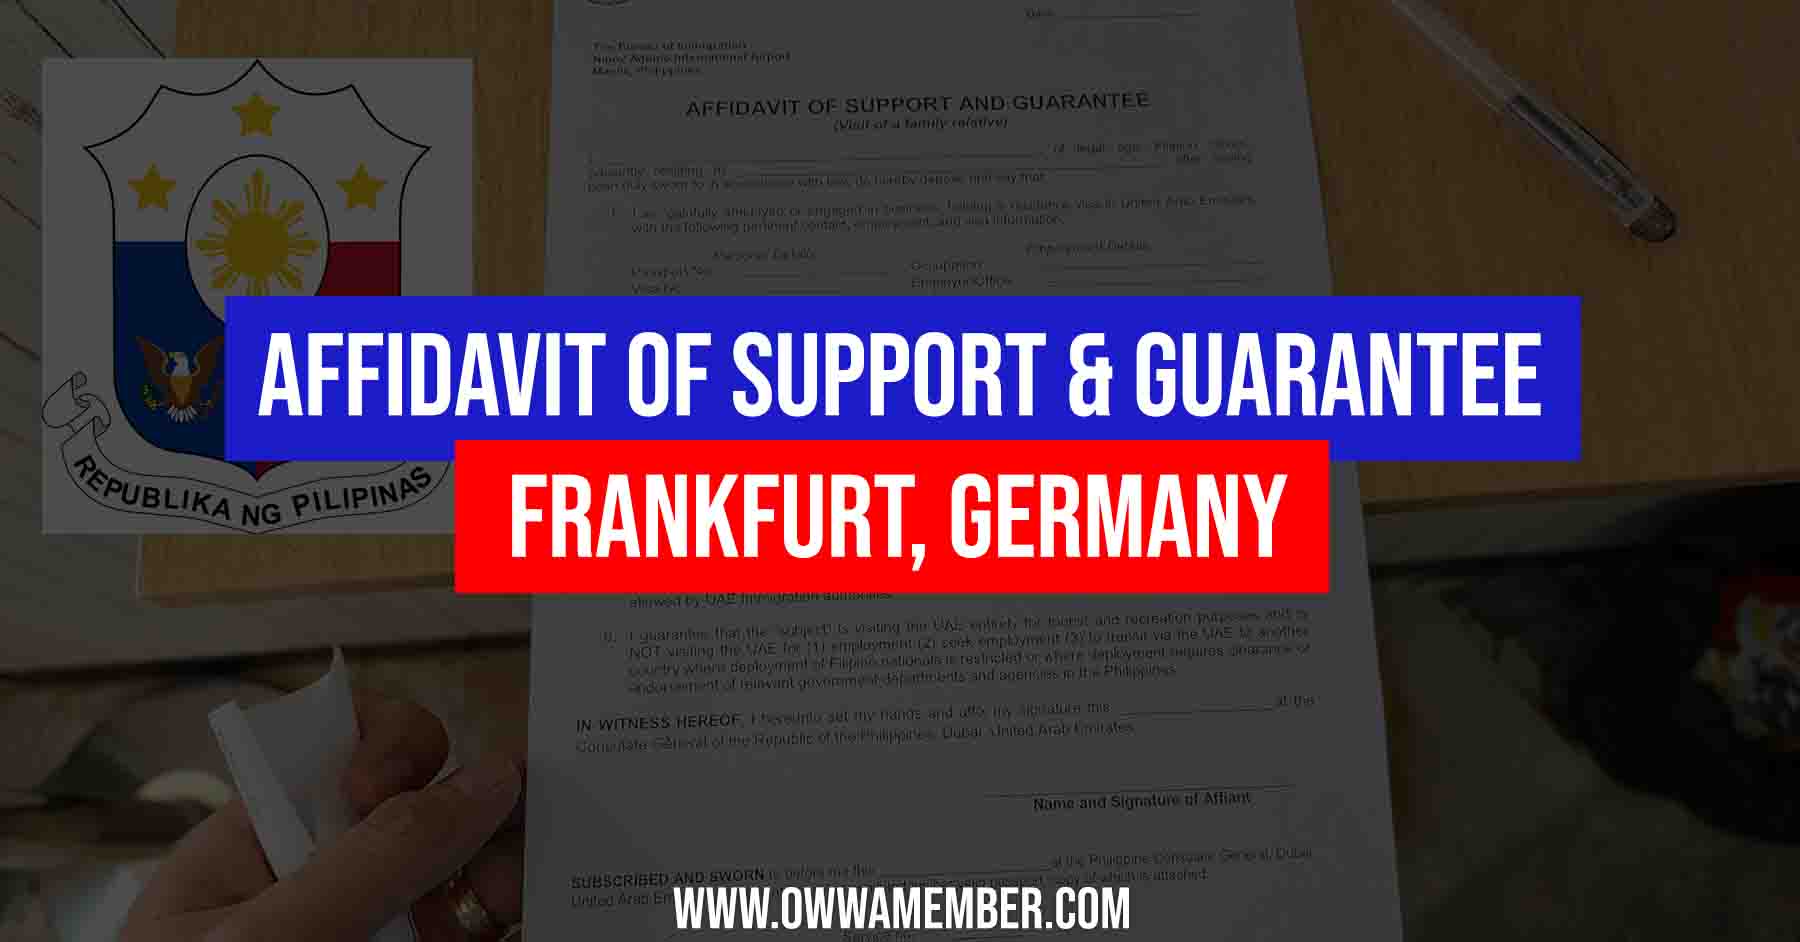 affidavit of support and guarantee ph consulate frankfurt germany